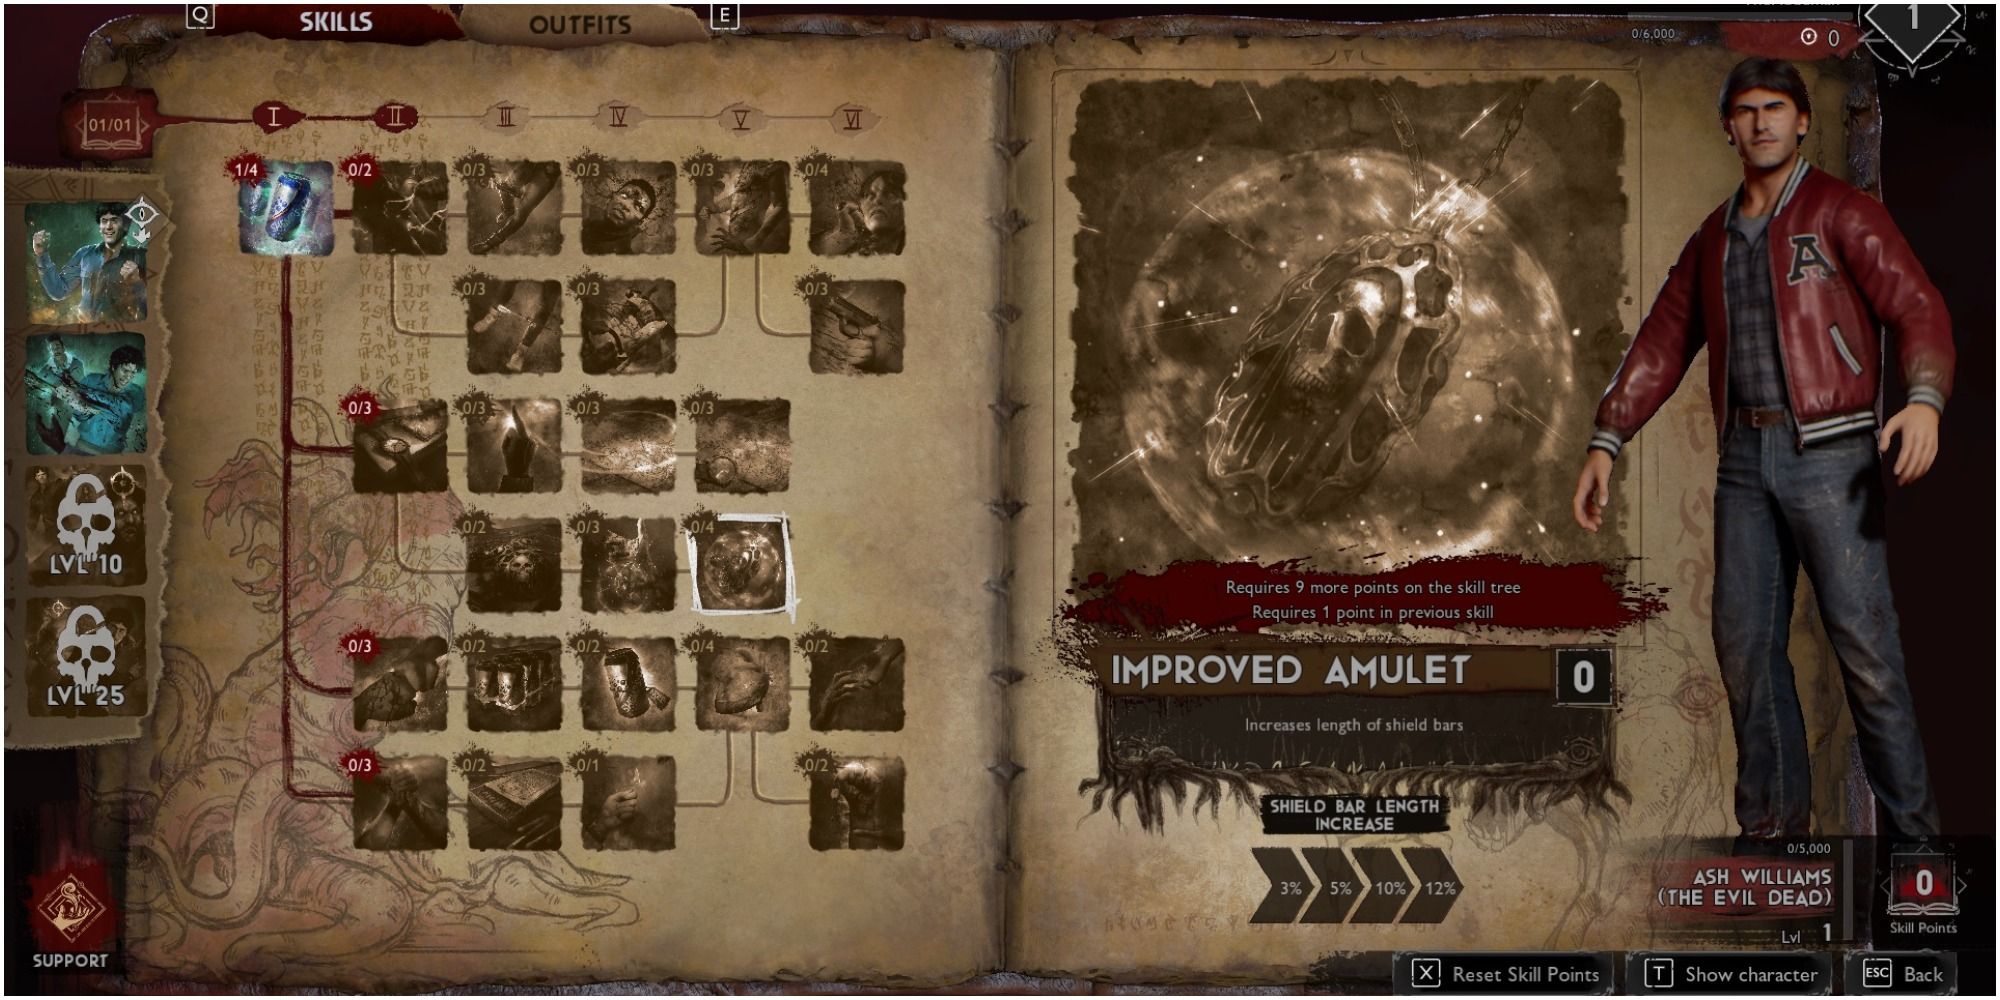 Evil Dead The Game Support Skill Improved Amulet Description